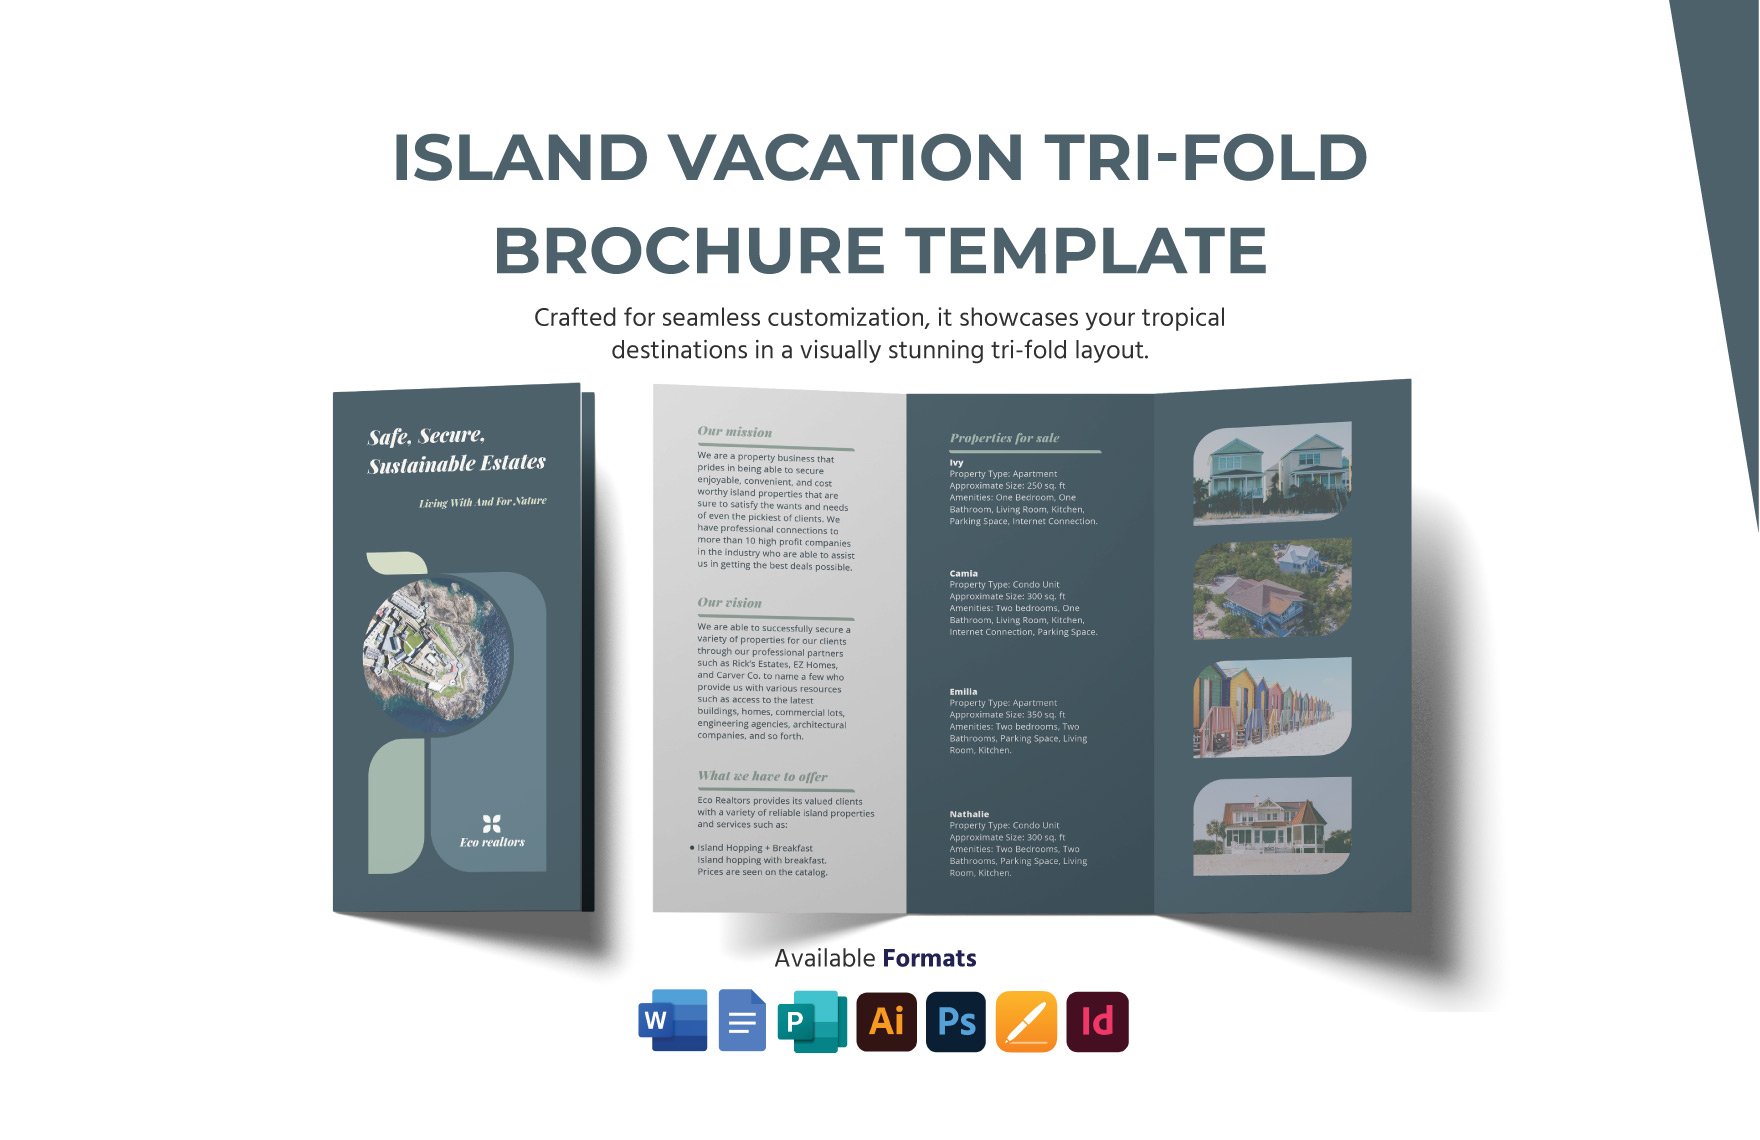 Island Vacation Tri-fold Brochure Template